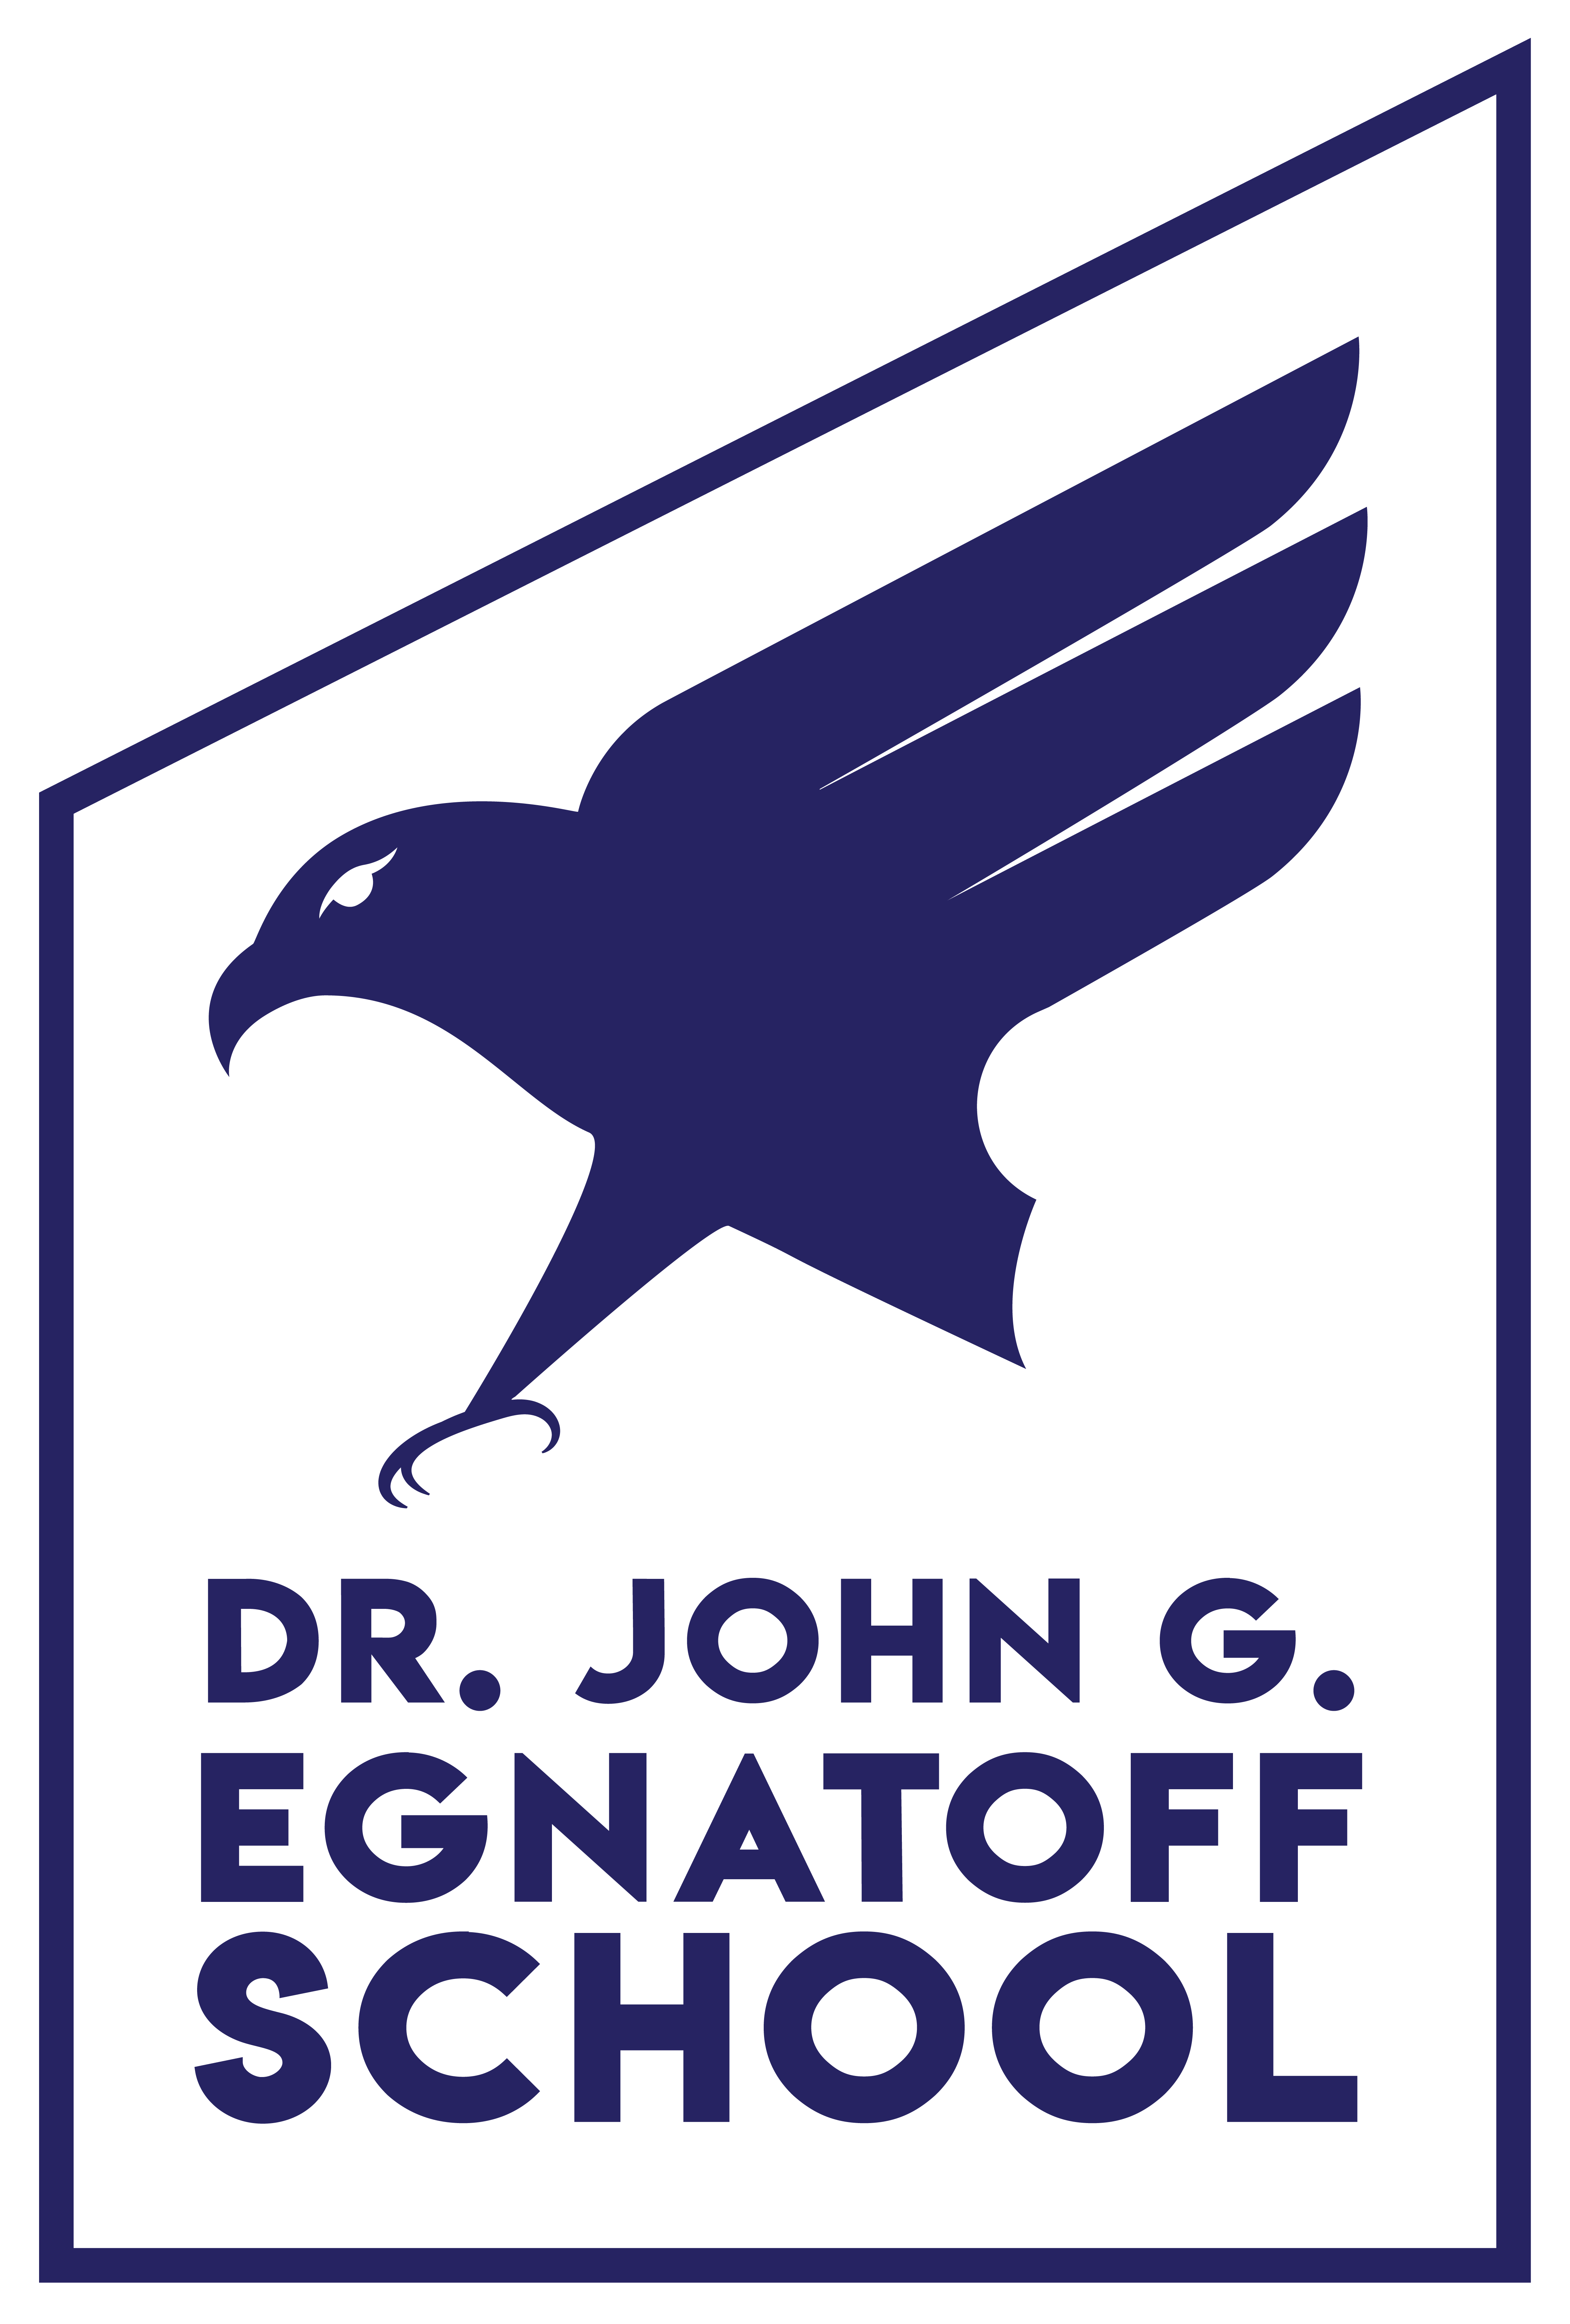 Dr. John G. Egnatoff School logo